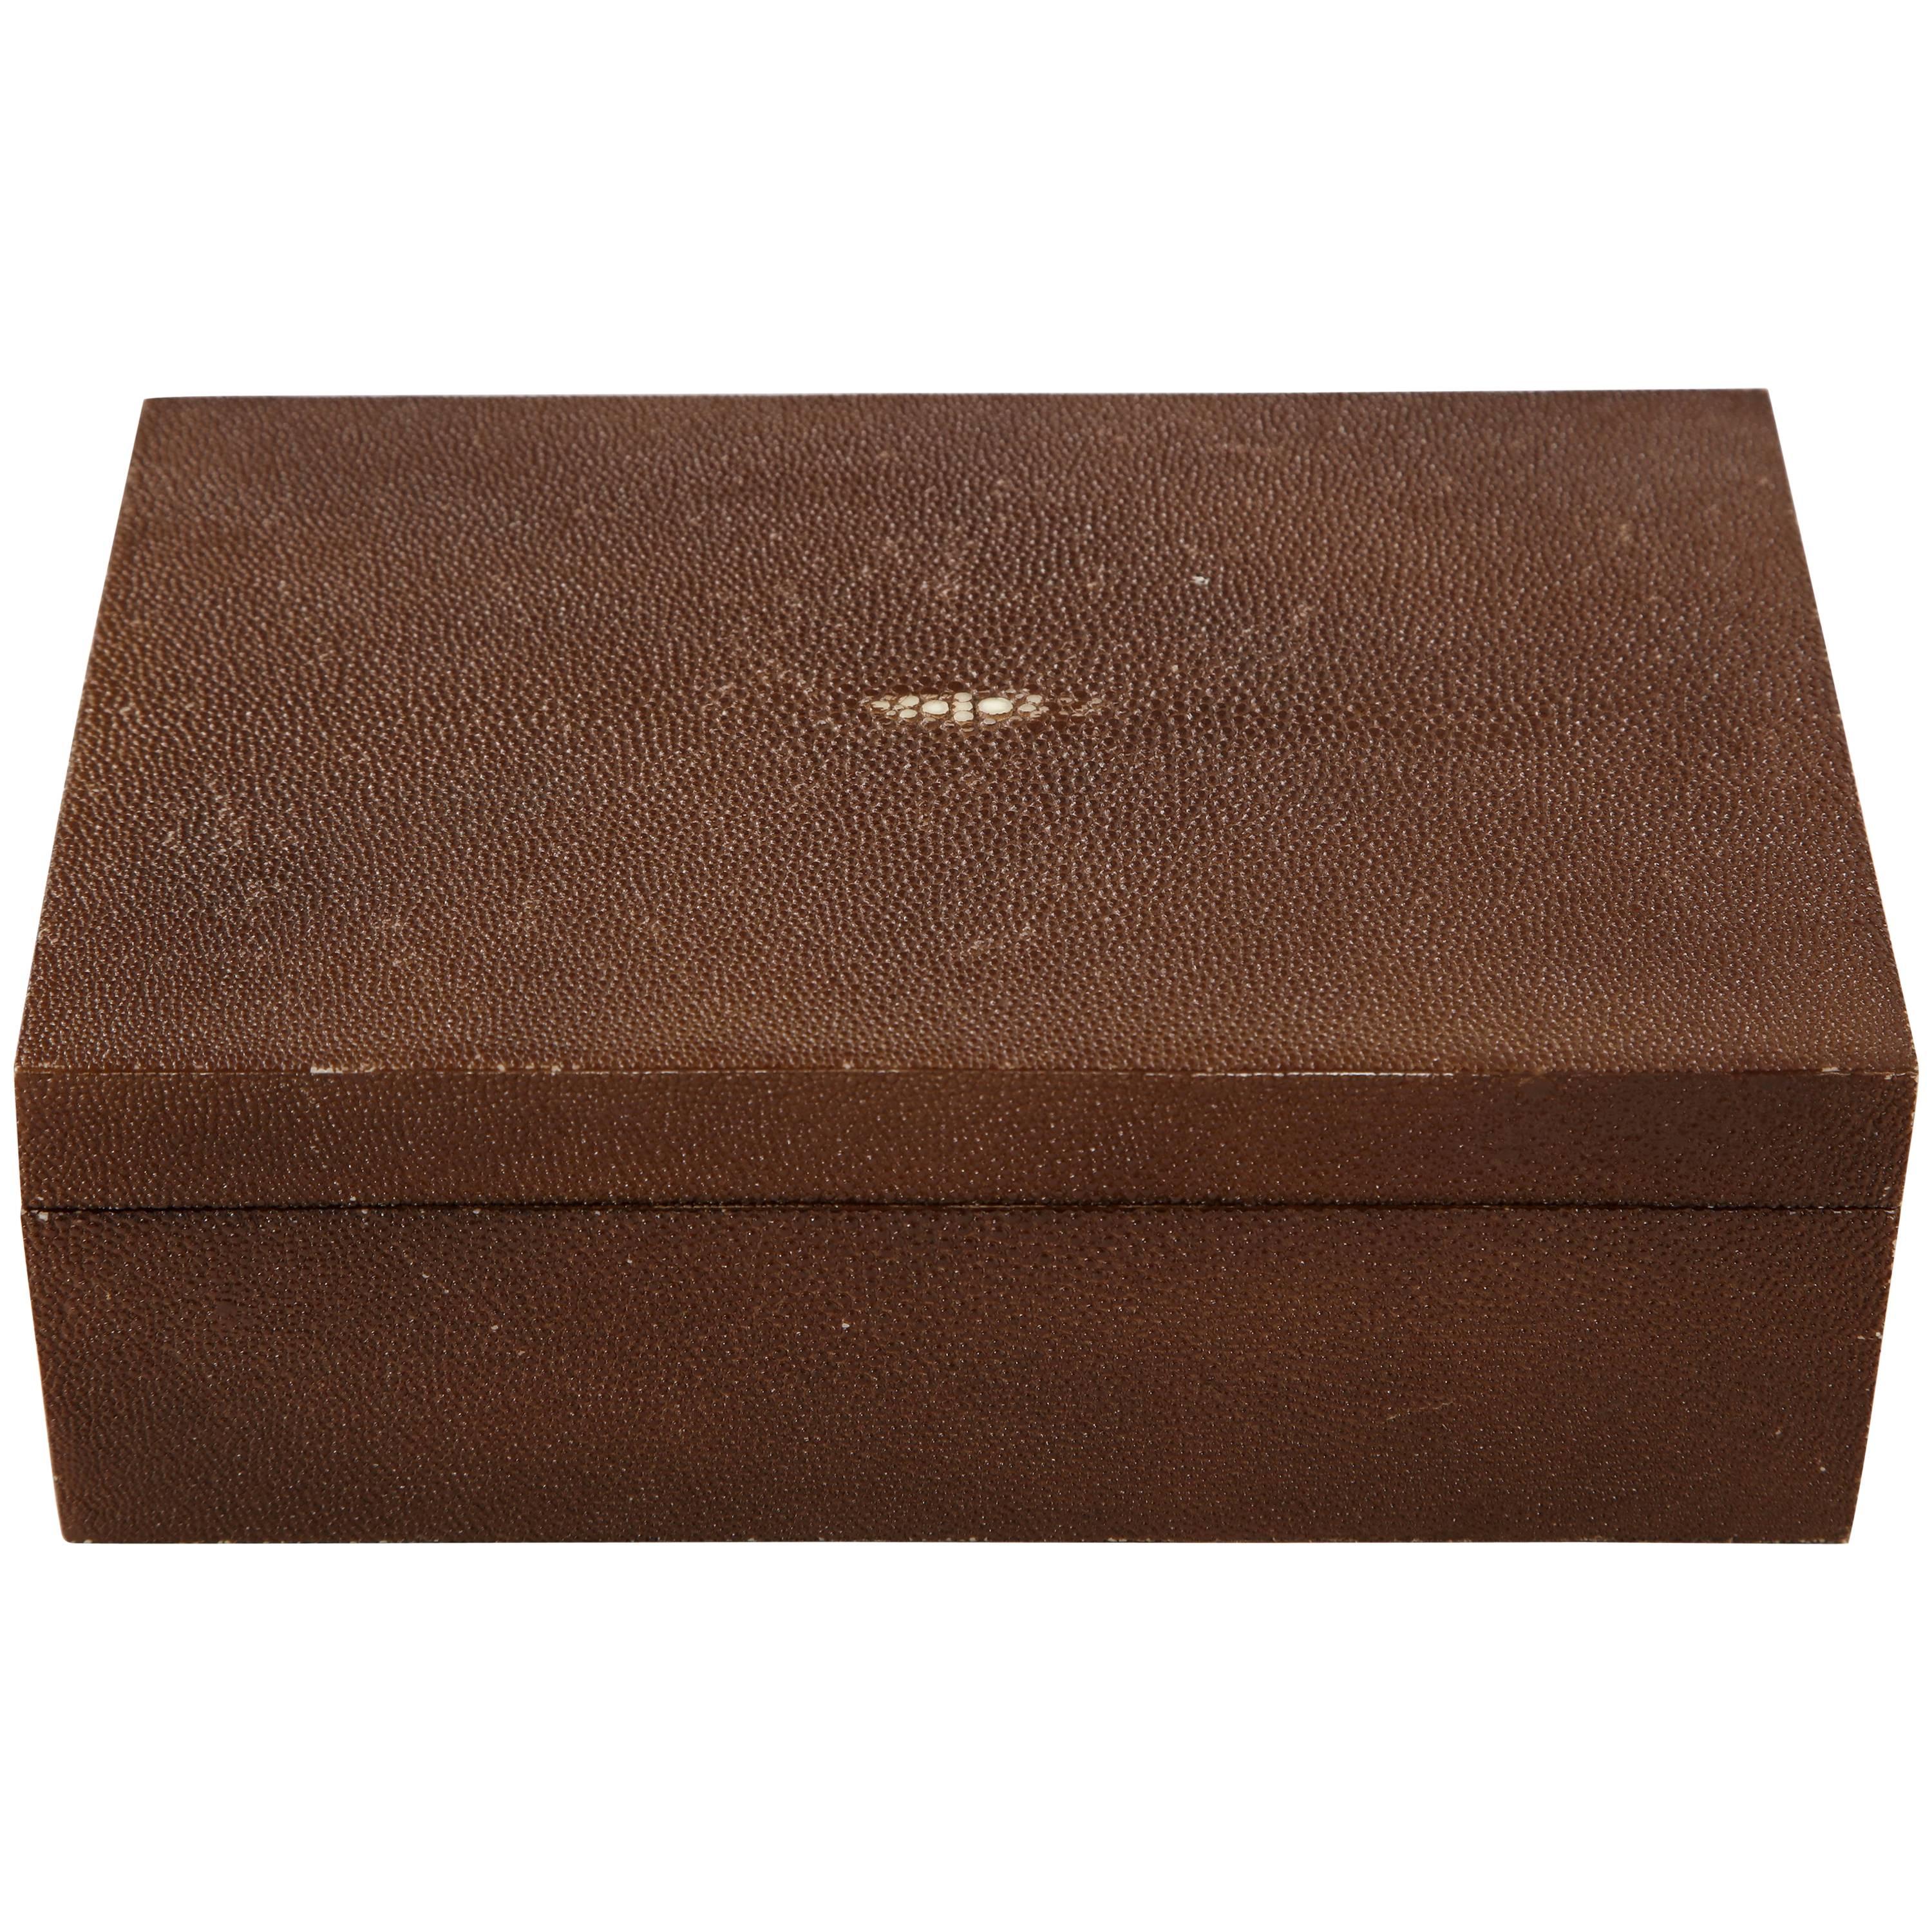 Cocoa Brown Shagreen Box